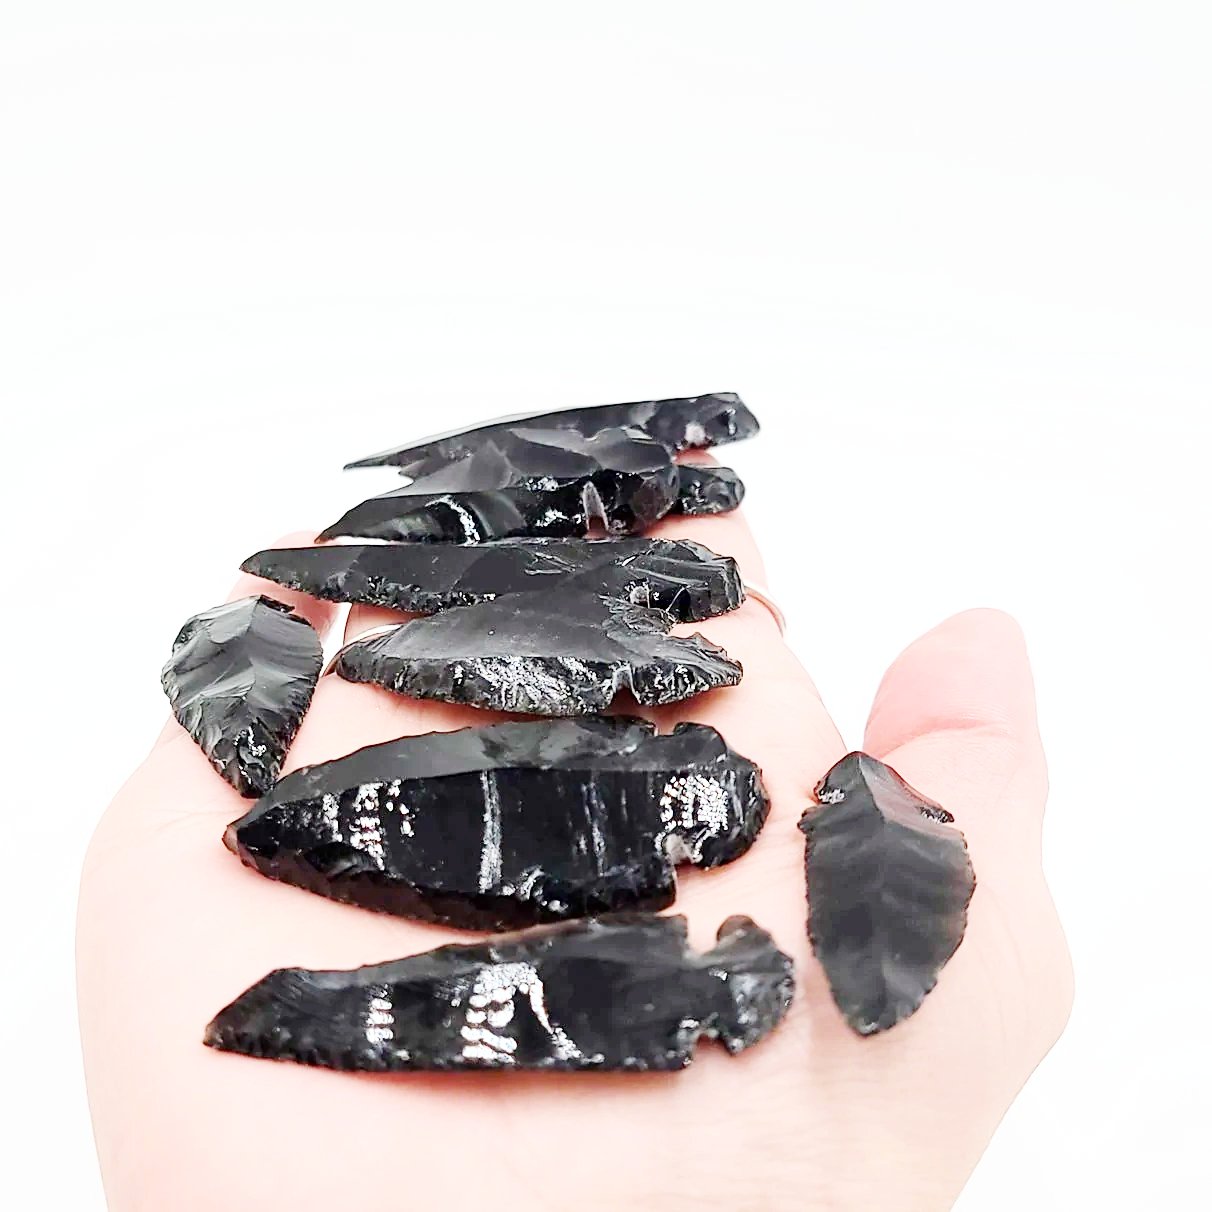 Black Obsidian Arrowhead Rough Stone - Elevated Metaphysical